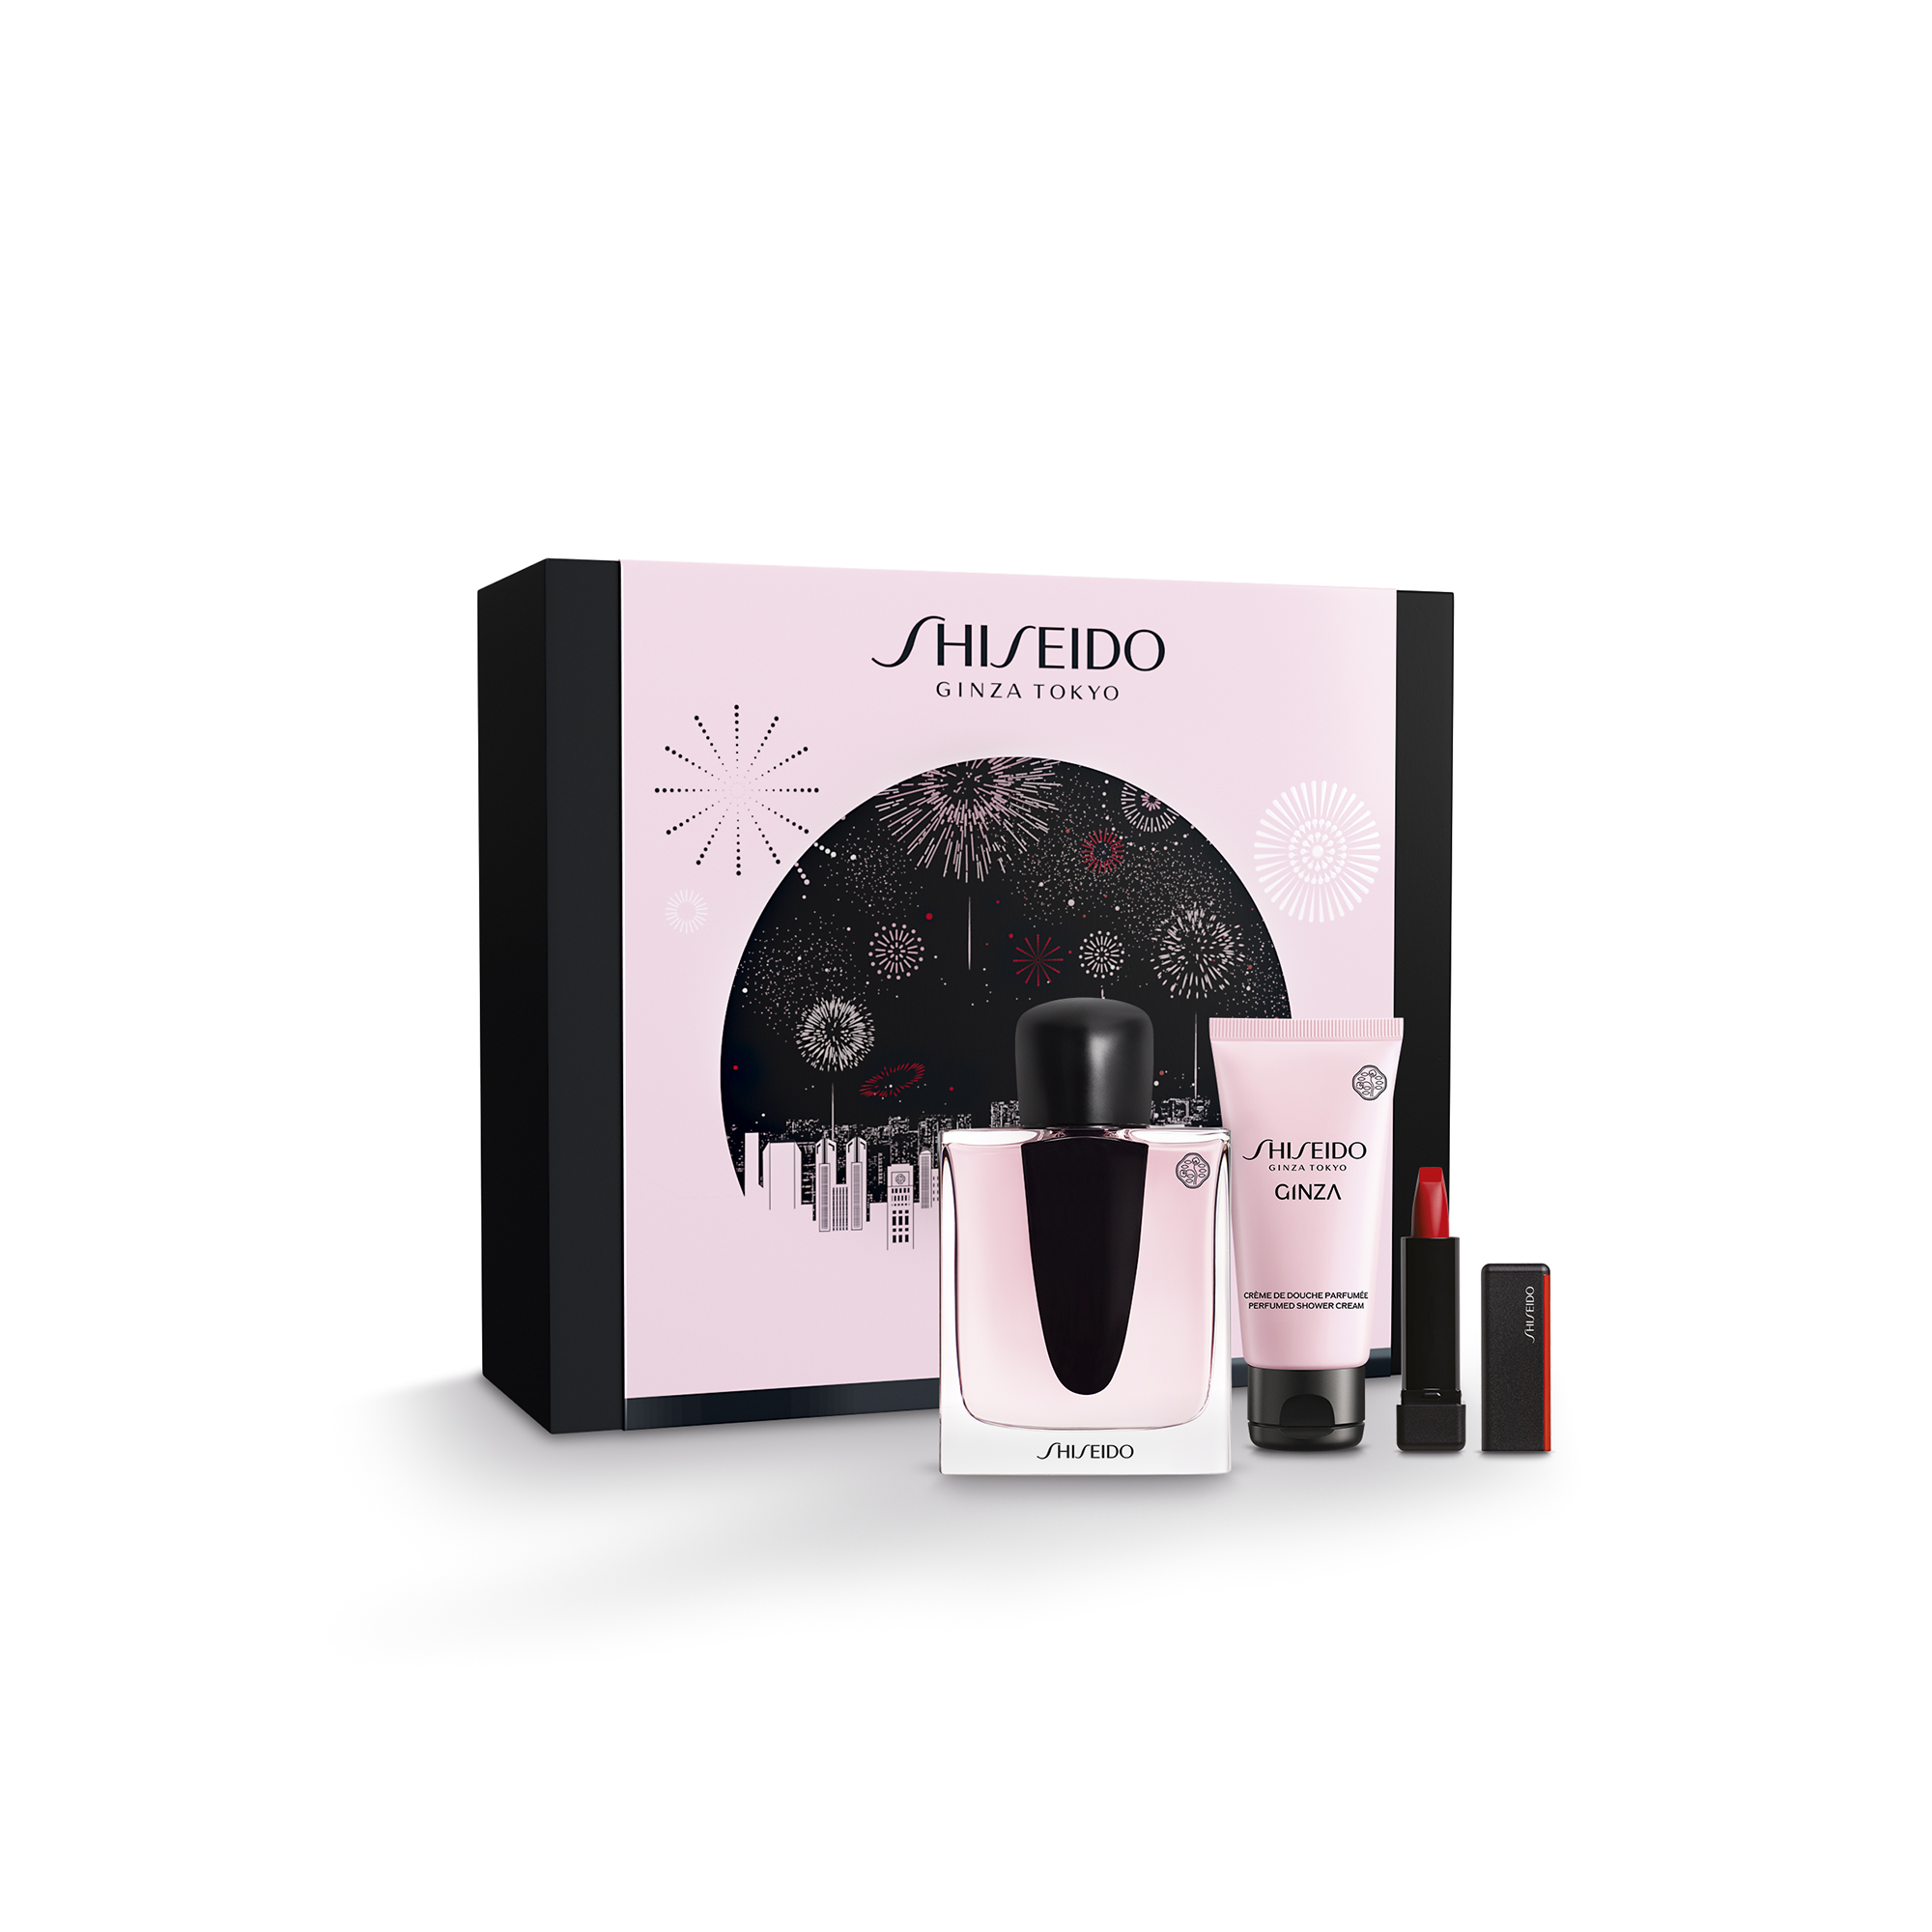 Shiseido-GINZA Holiday Set - 90ml